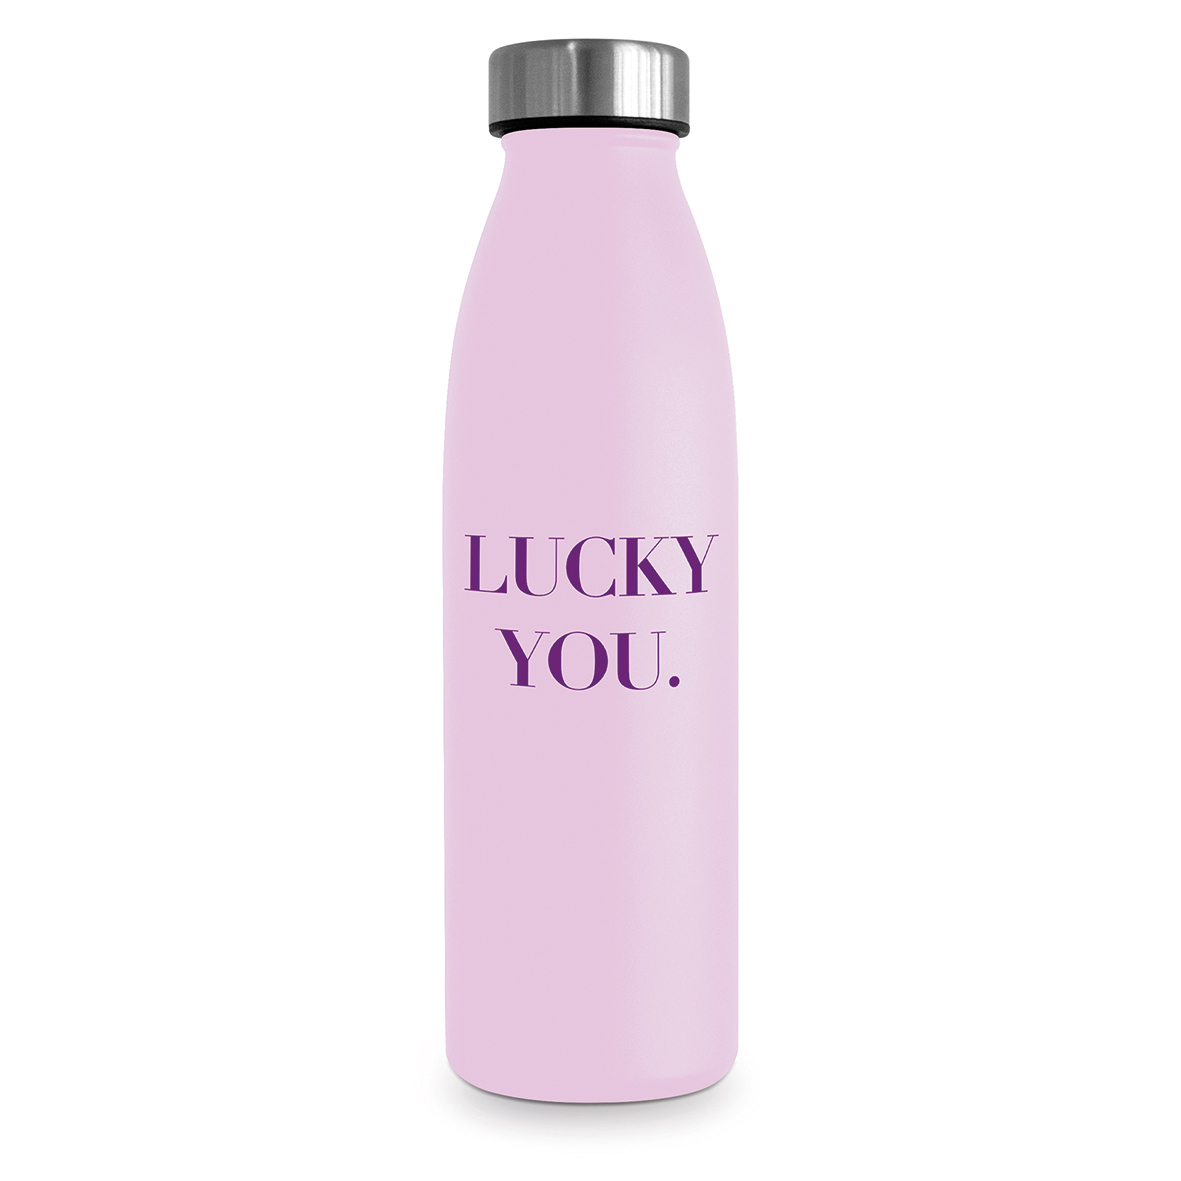 Lucky You. Design Bottle 0.5 D@H